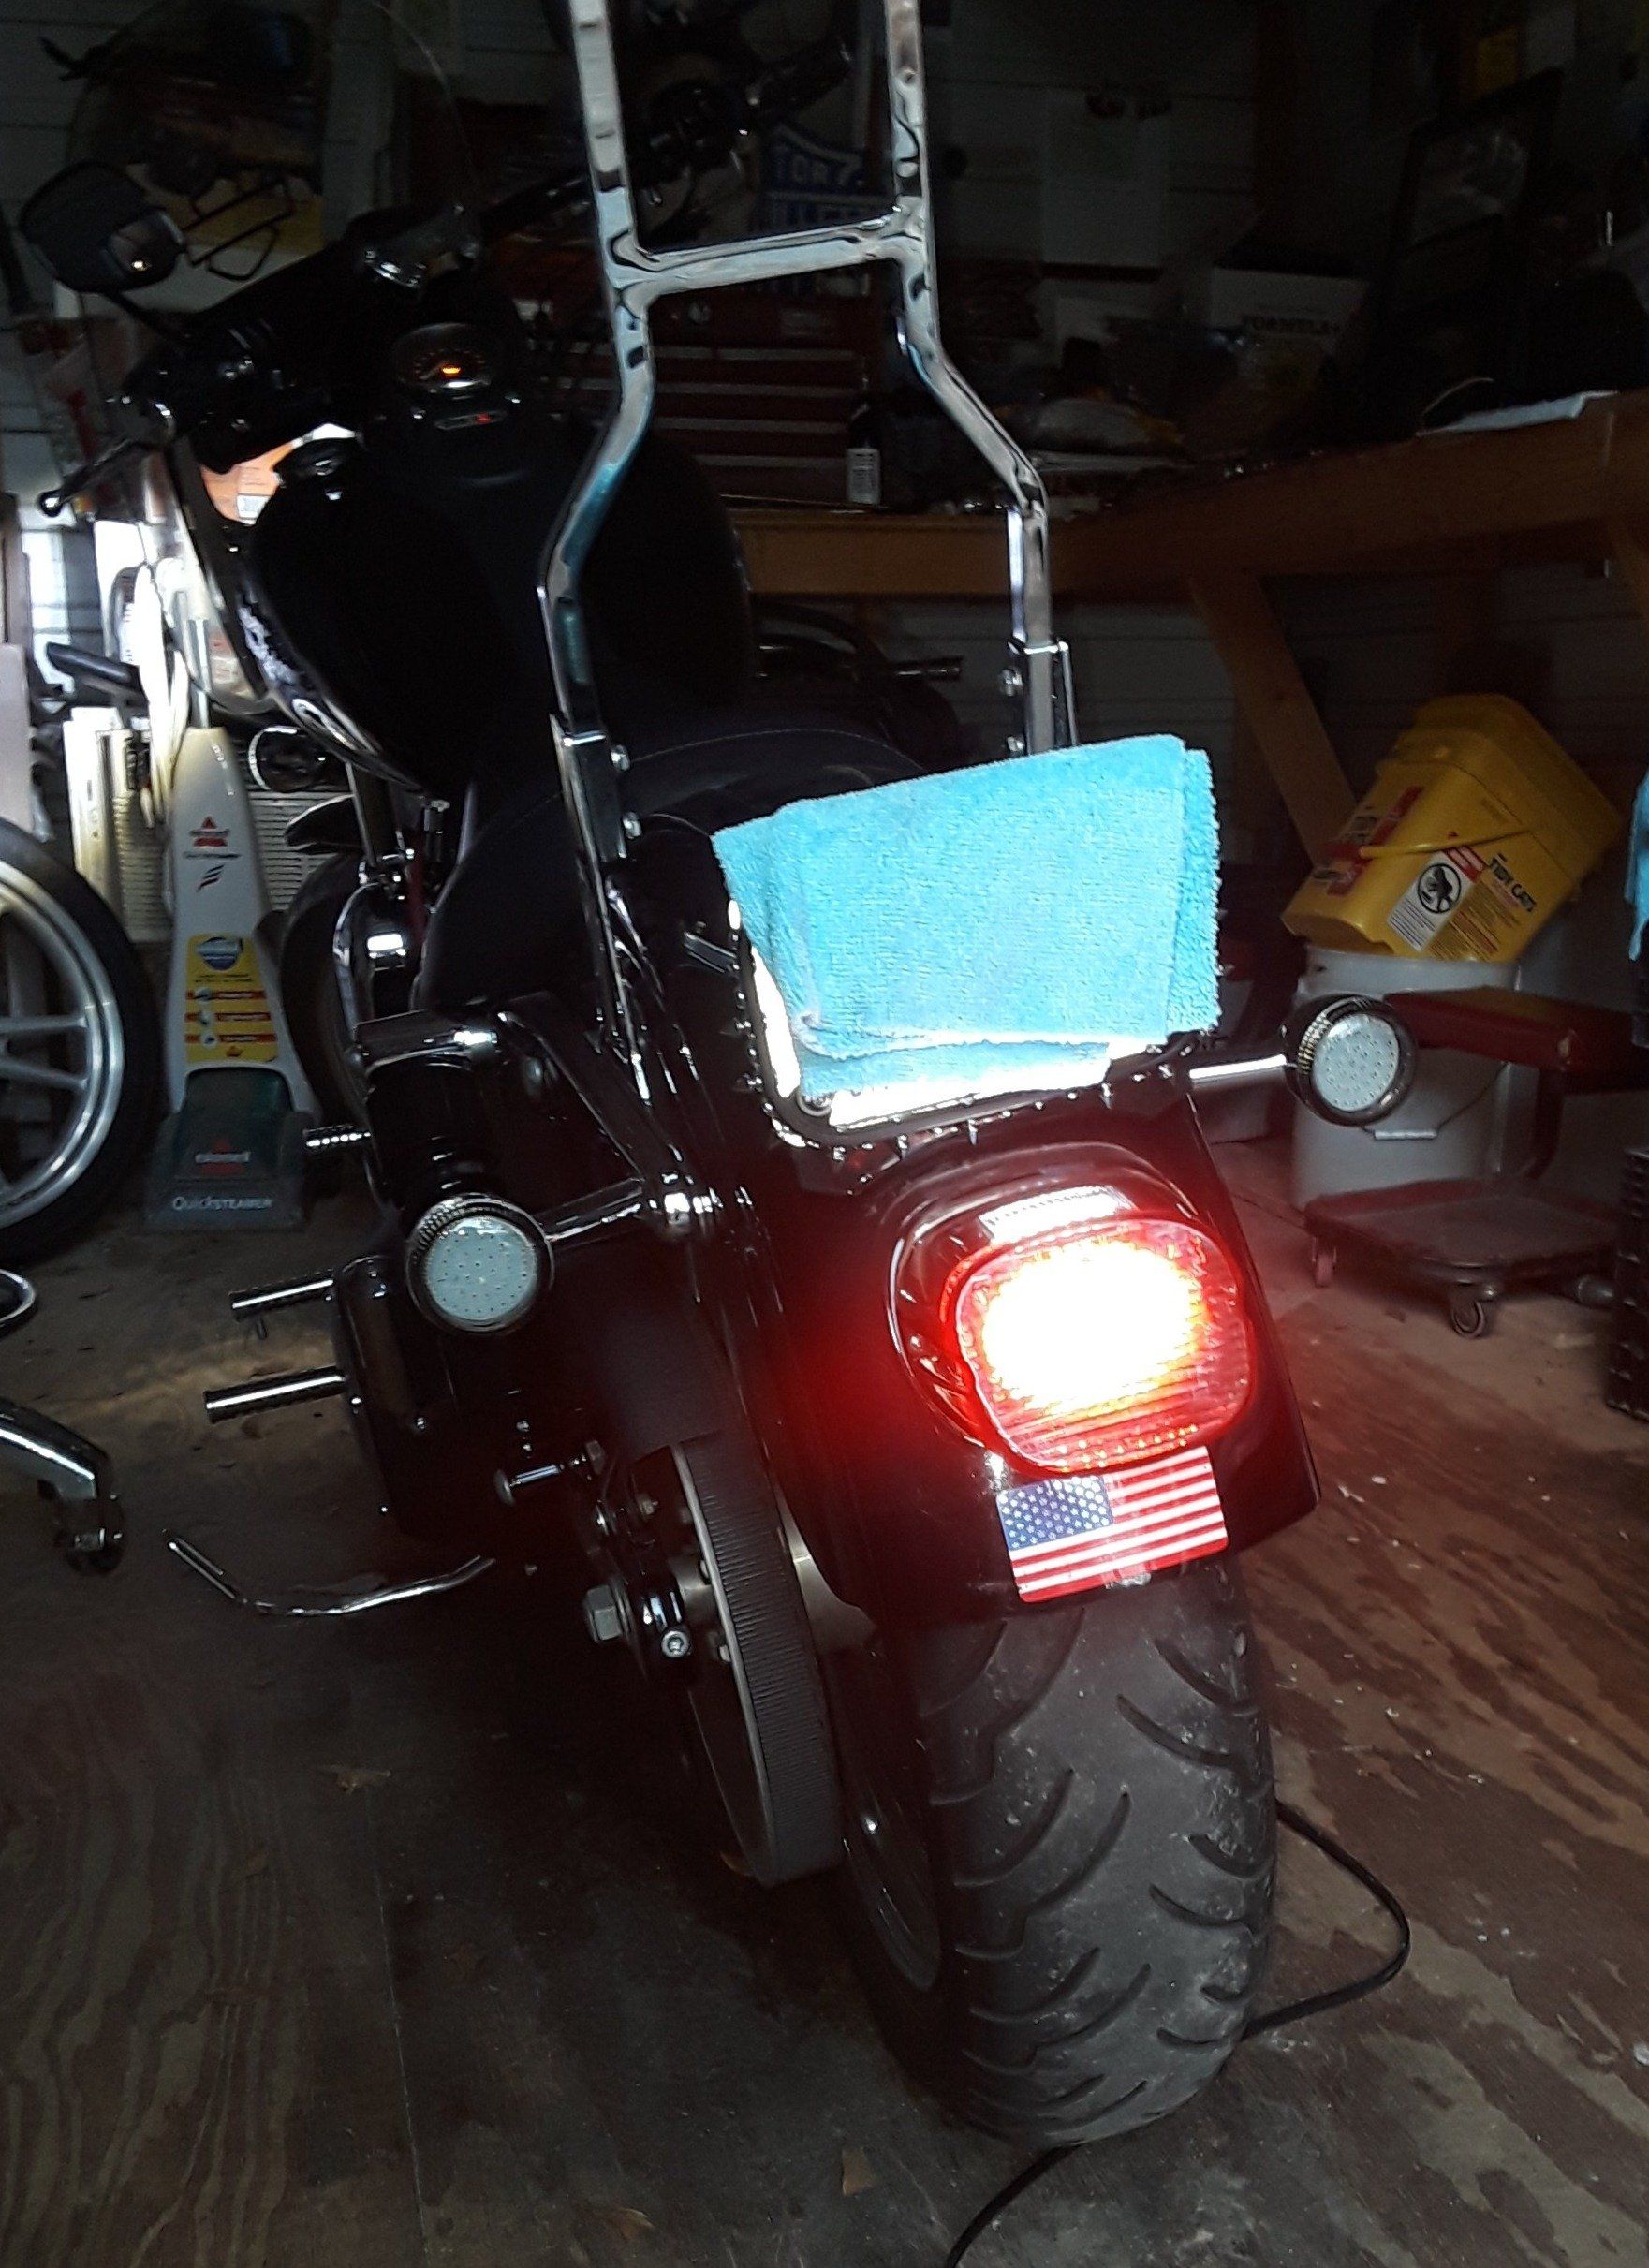 Eagle Lights Layback LED Tail Brake Light Kit for Harley Davidson Motorcycles